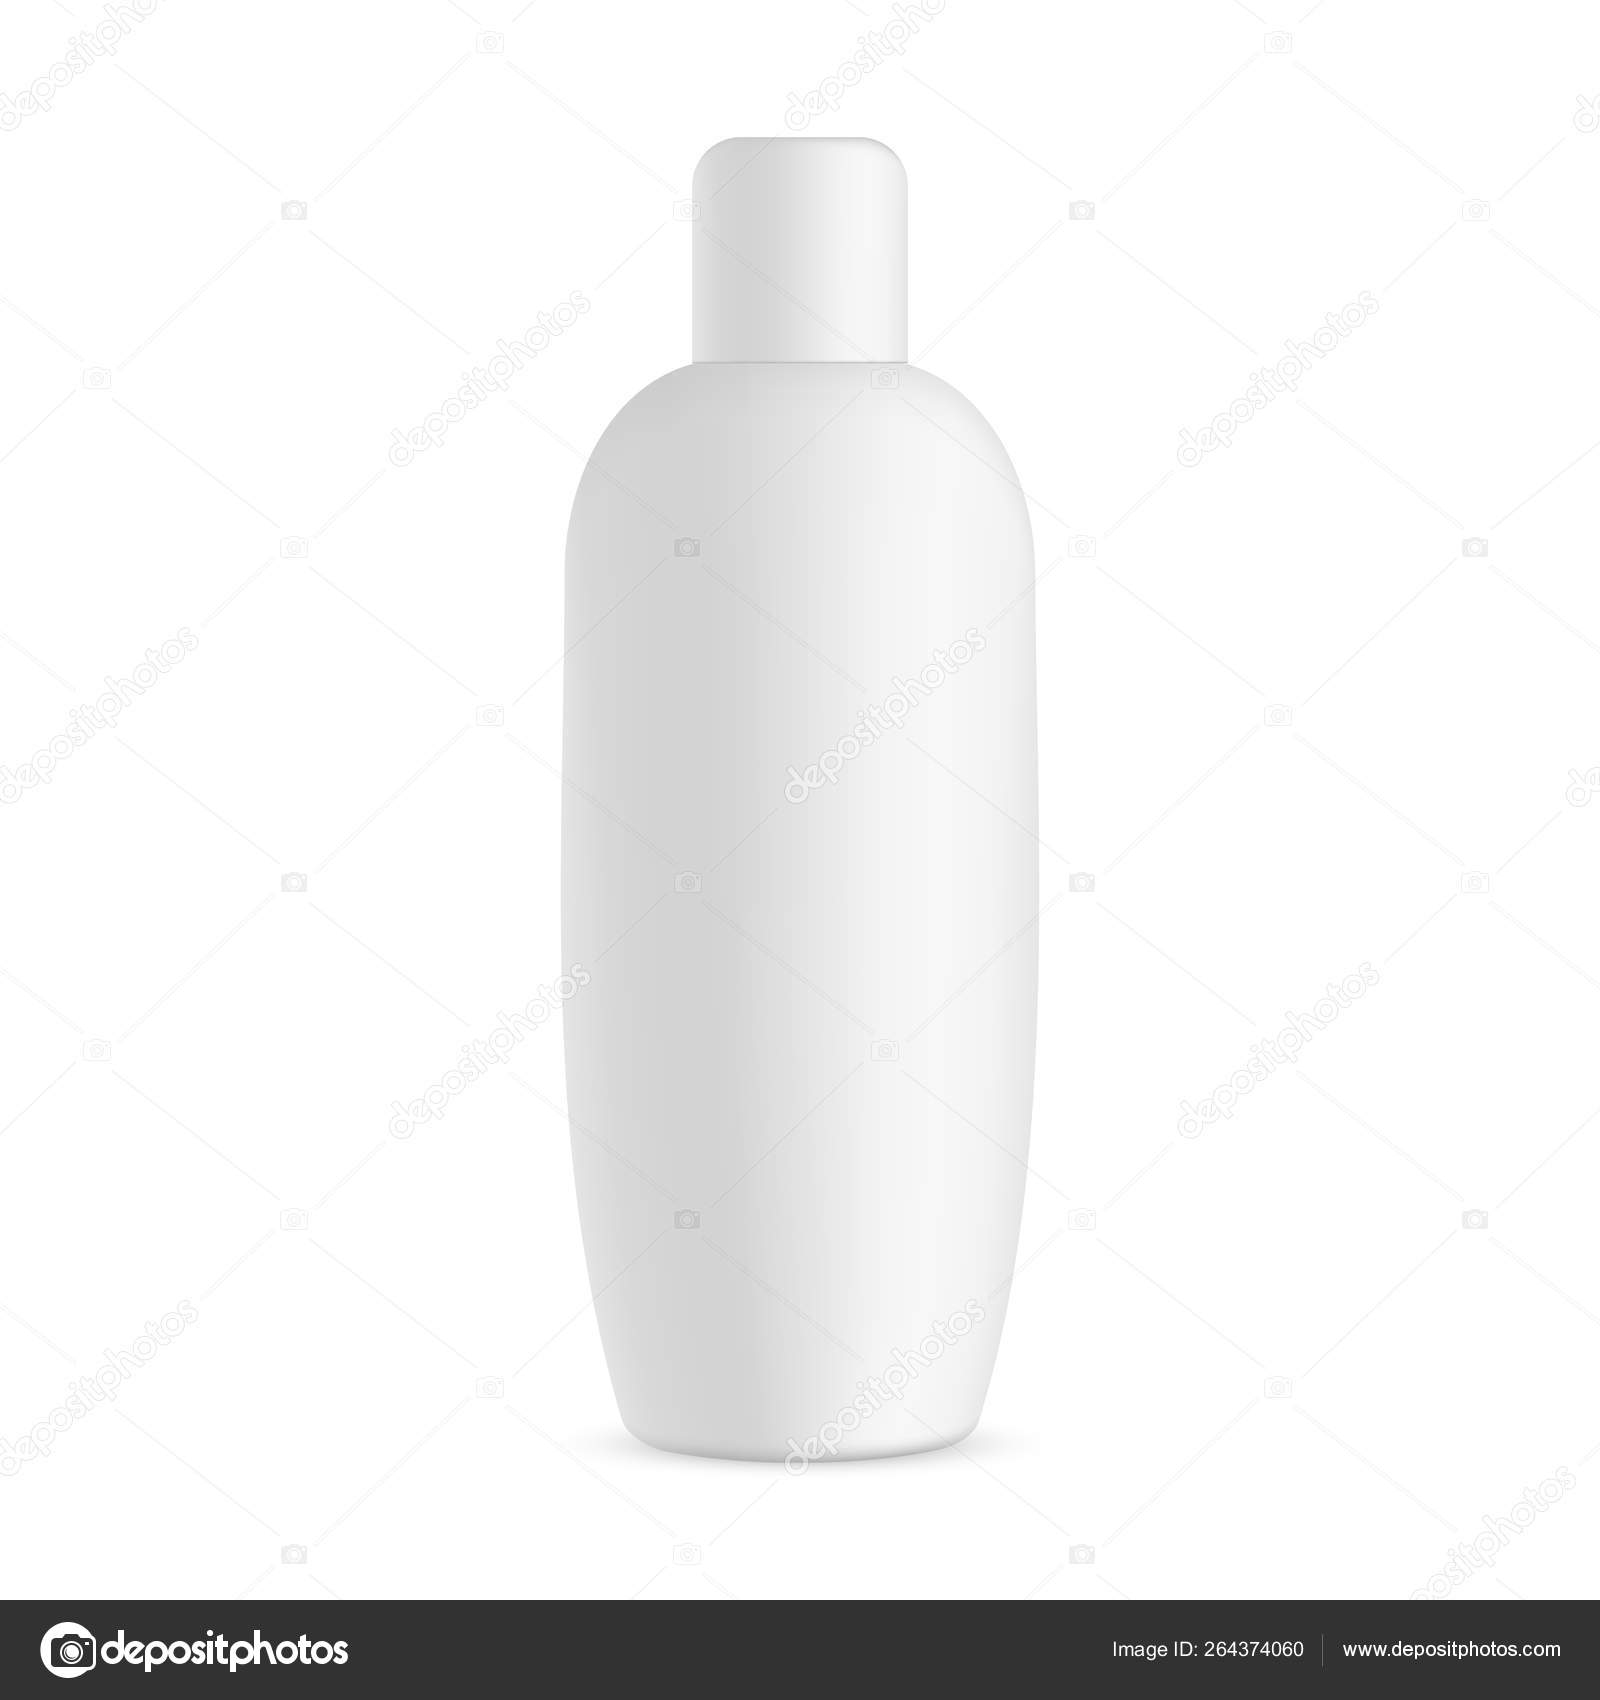 Download Shampoo Bottle Mockup Isolated Vector Image By C Evgeniyzimin Vector Stock 264374060